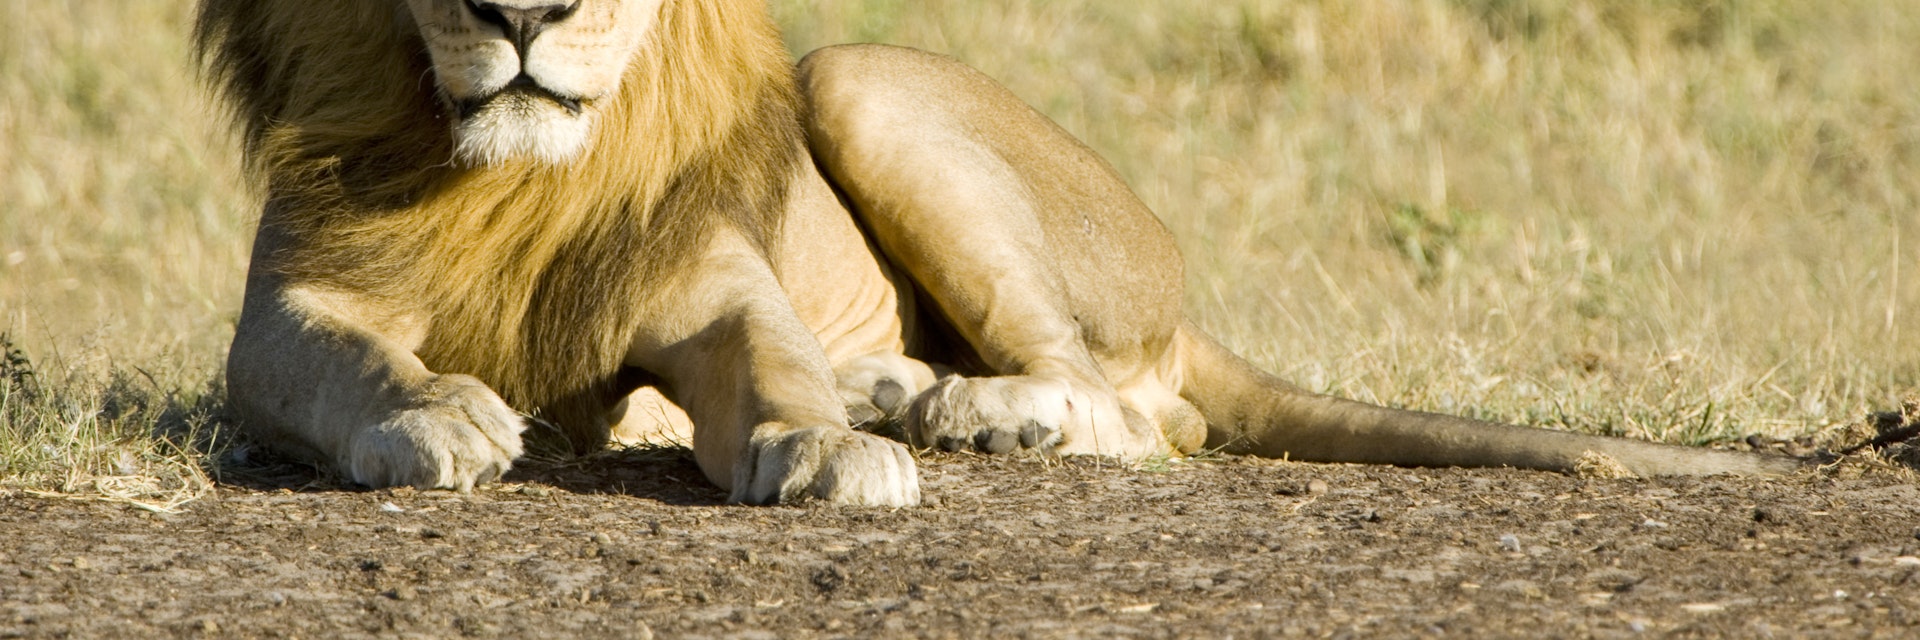 Lion, Panthera leo, male Kalahari lion resting, Central Kalahari Game Reserve, Botswana - stock photo
